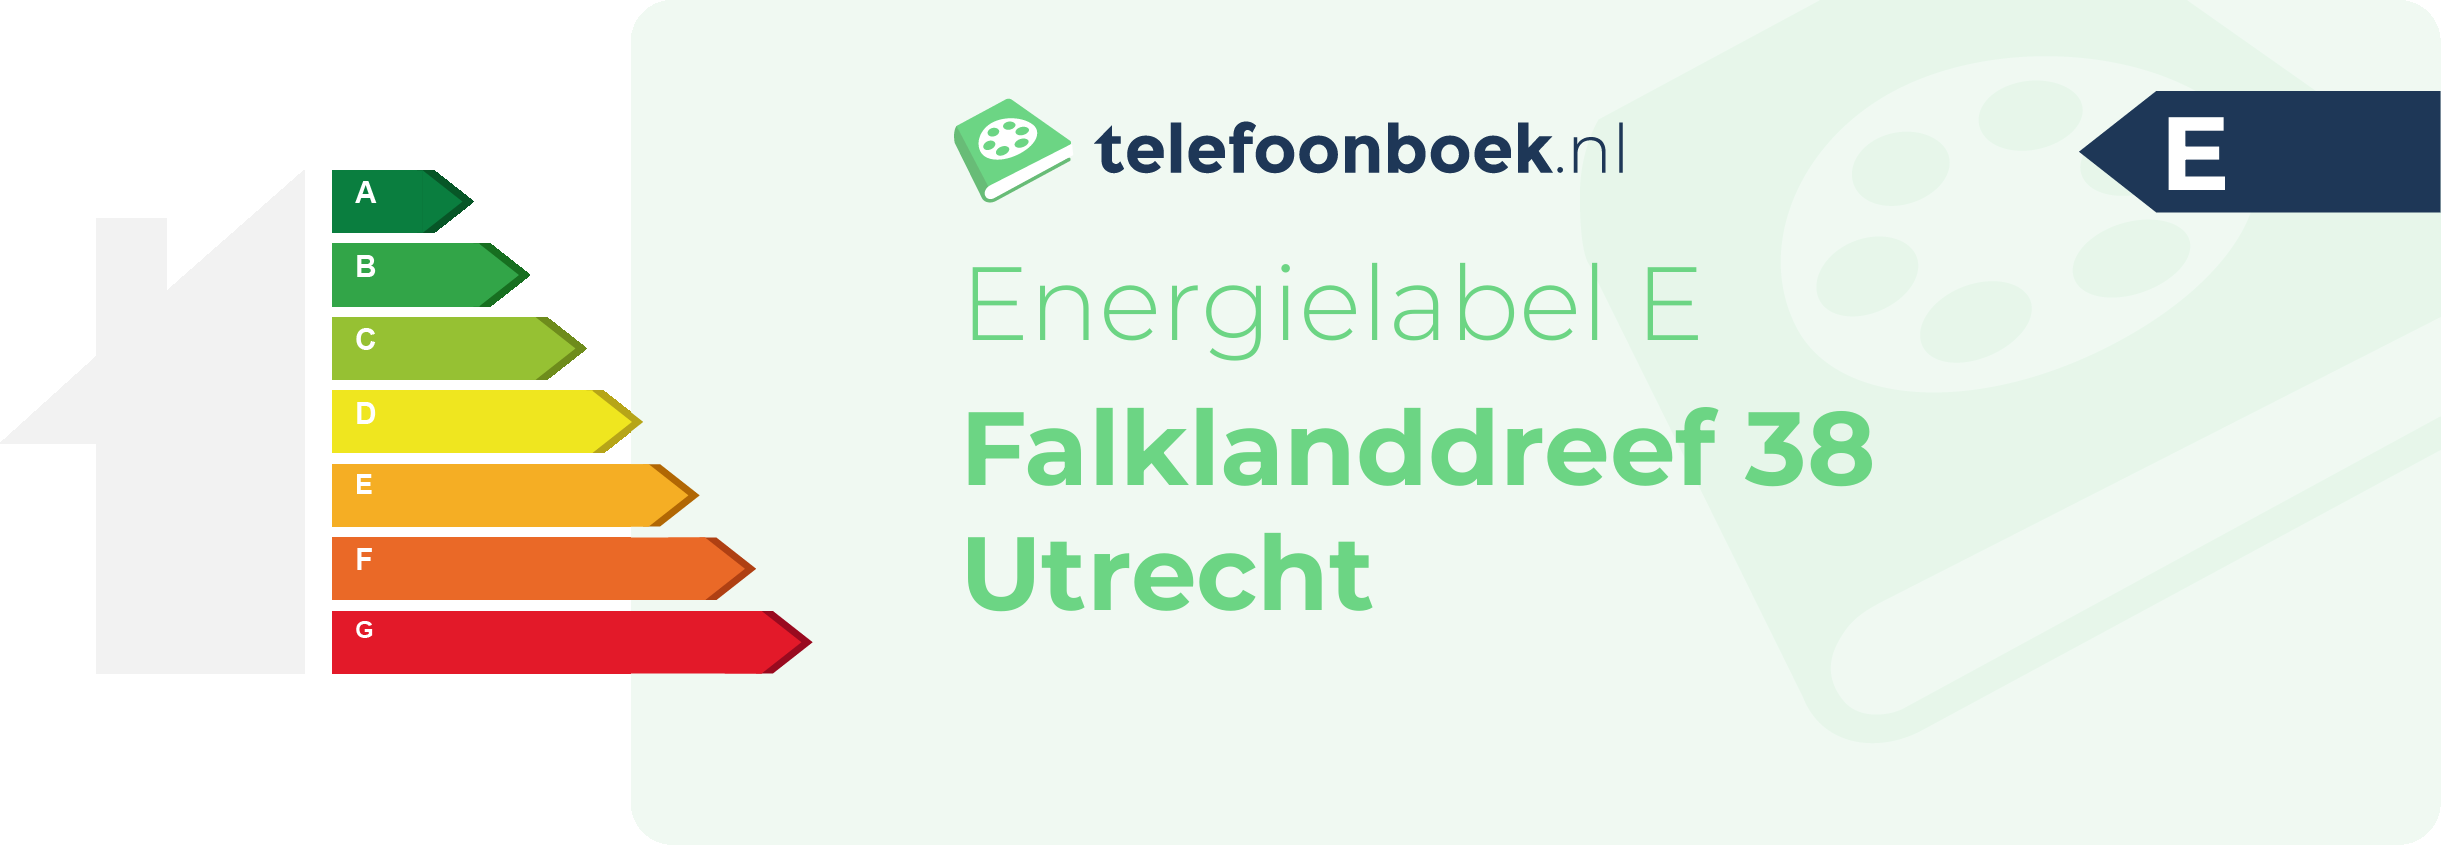 Energielabel Falklanddreef 38 Utrecht